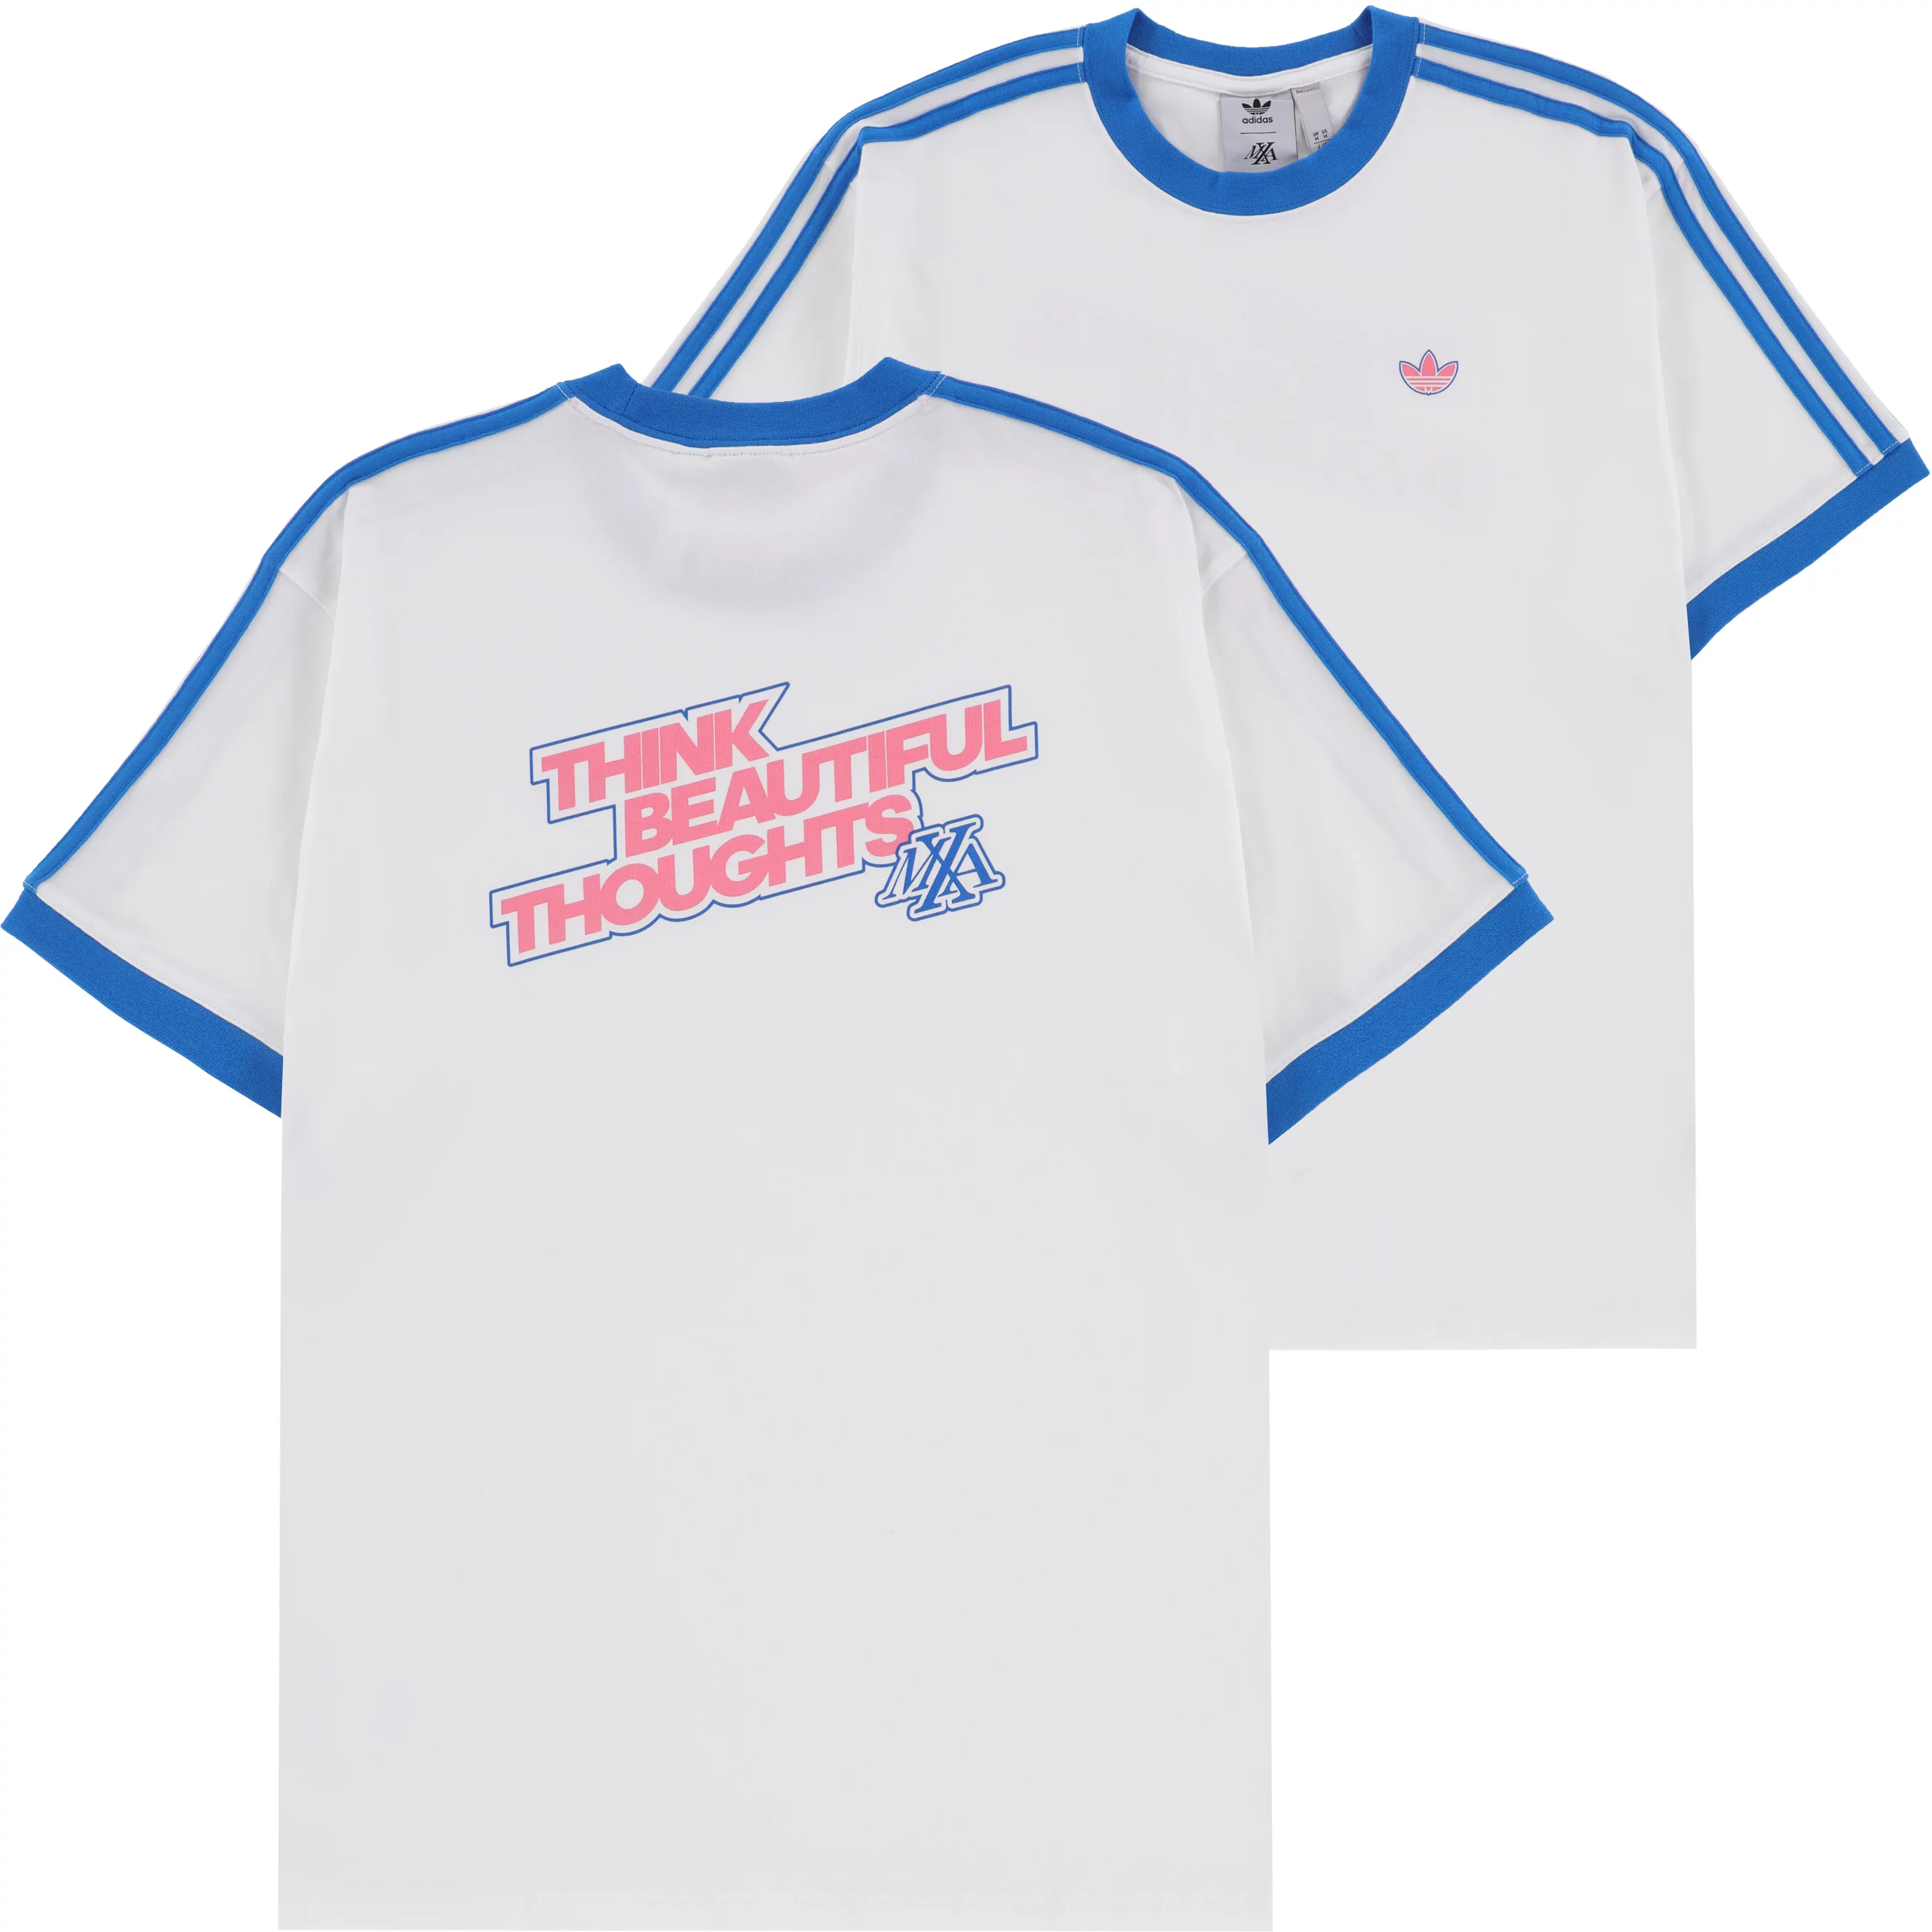 Adidas Maxallure Ringer Jersey - bird/bliss | Tactics white/blue pink